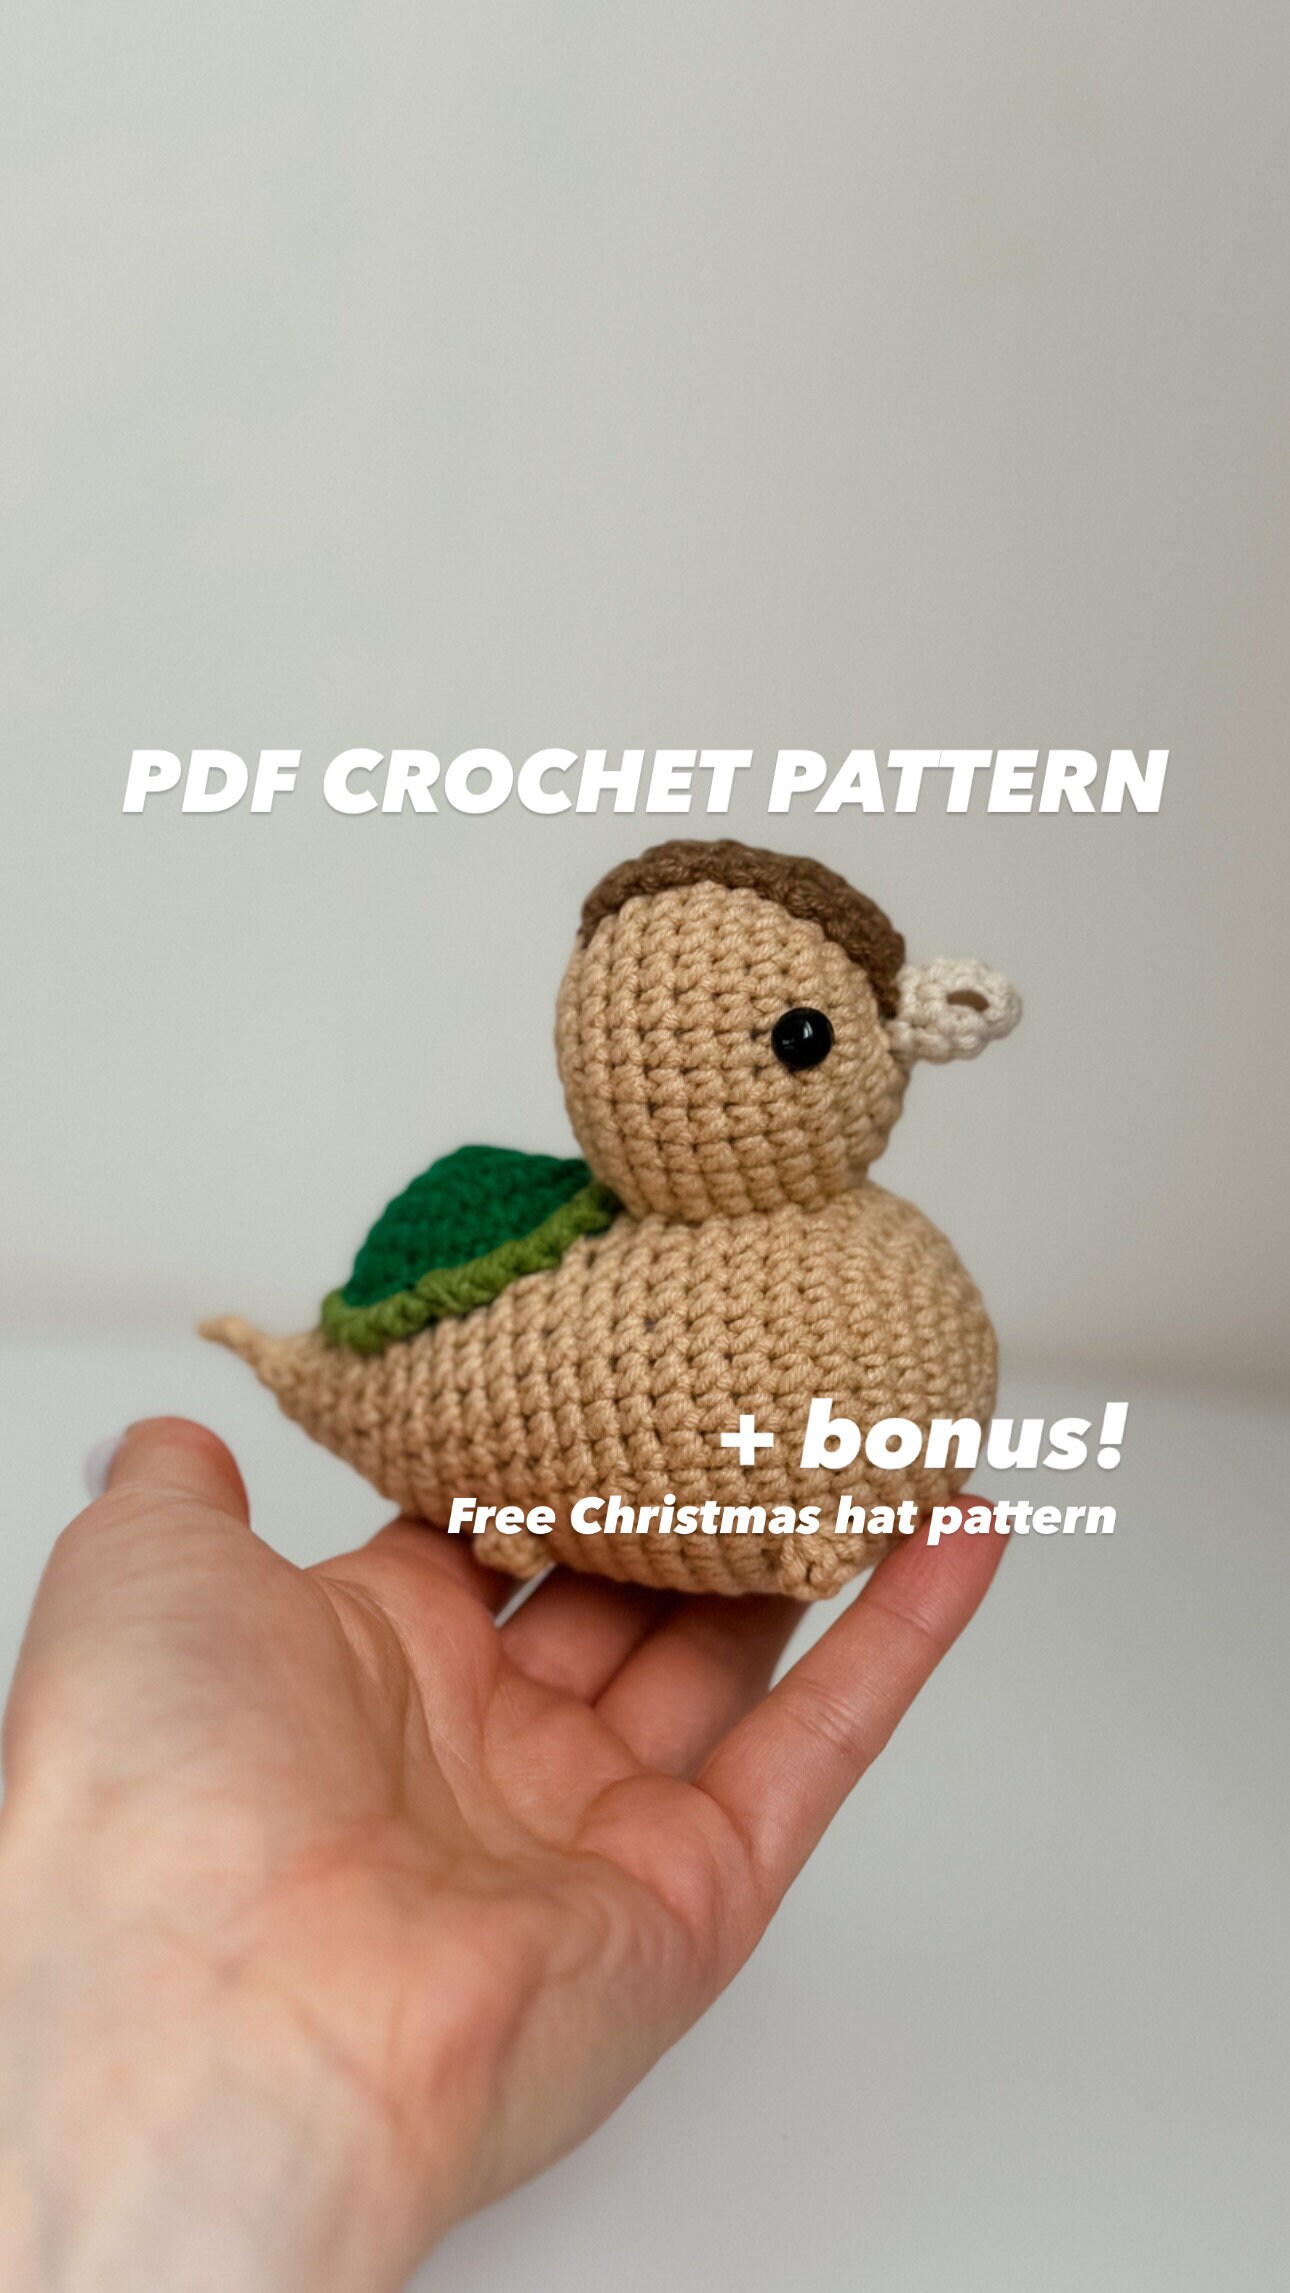 Duckling Crochet Kit / Crochet Duckling DIY Kit Craft Kit Amigurumi Kit  Bird Duck Chick Pattern Eco Crochet Easter Gift for Crocheter 